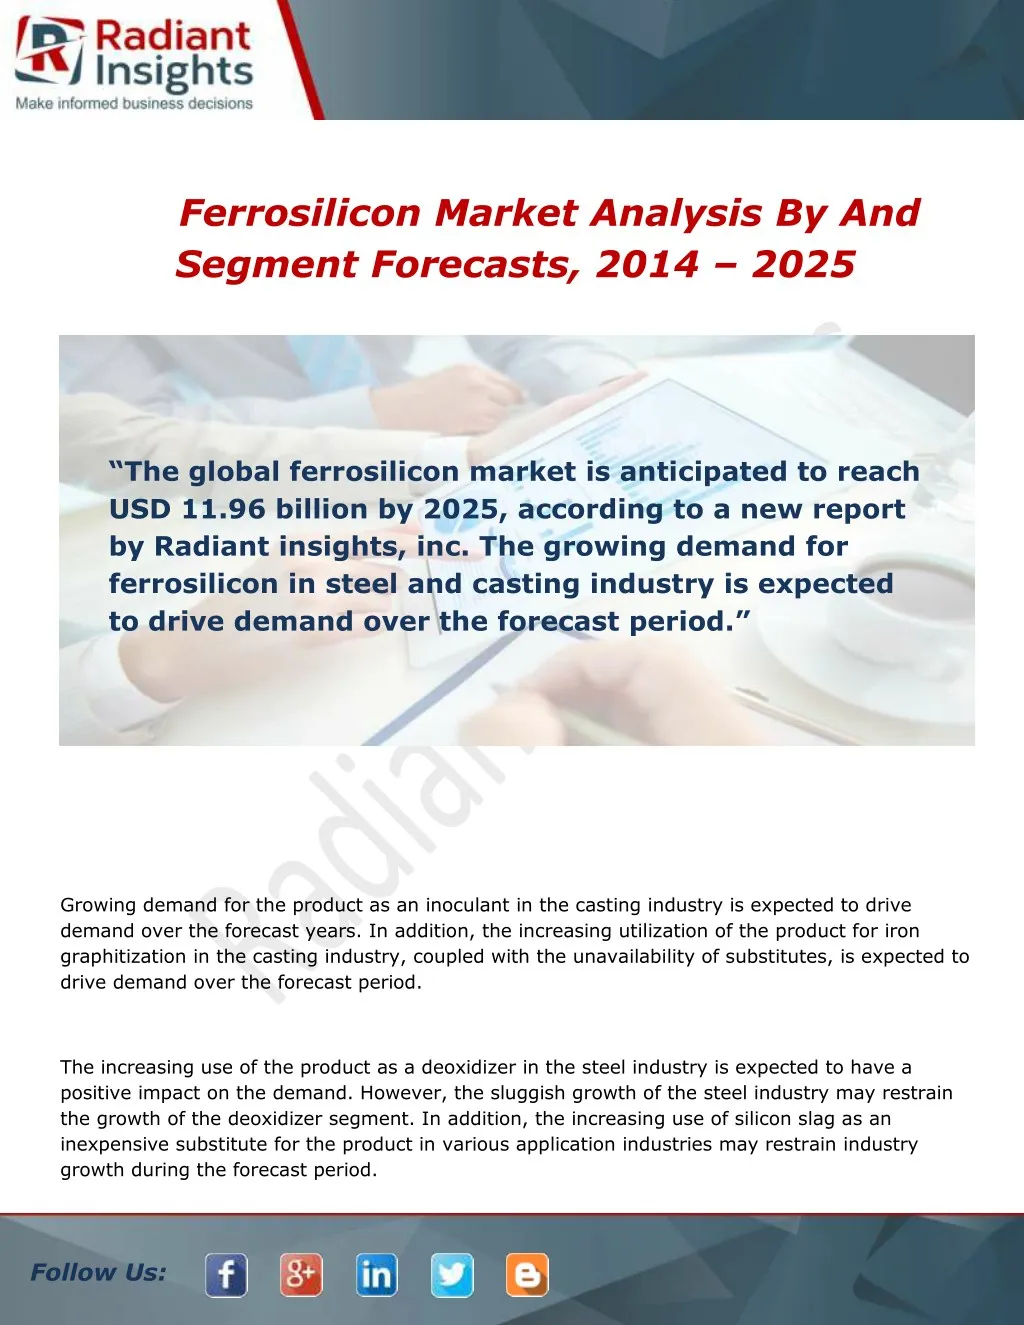 ferrosilicon market analysis by and segment